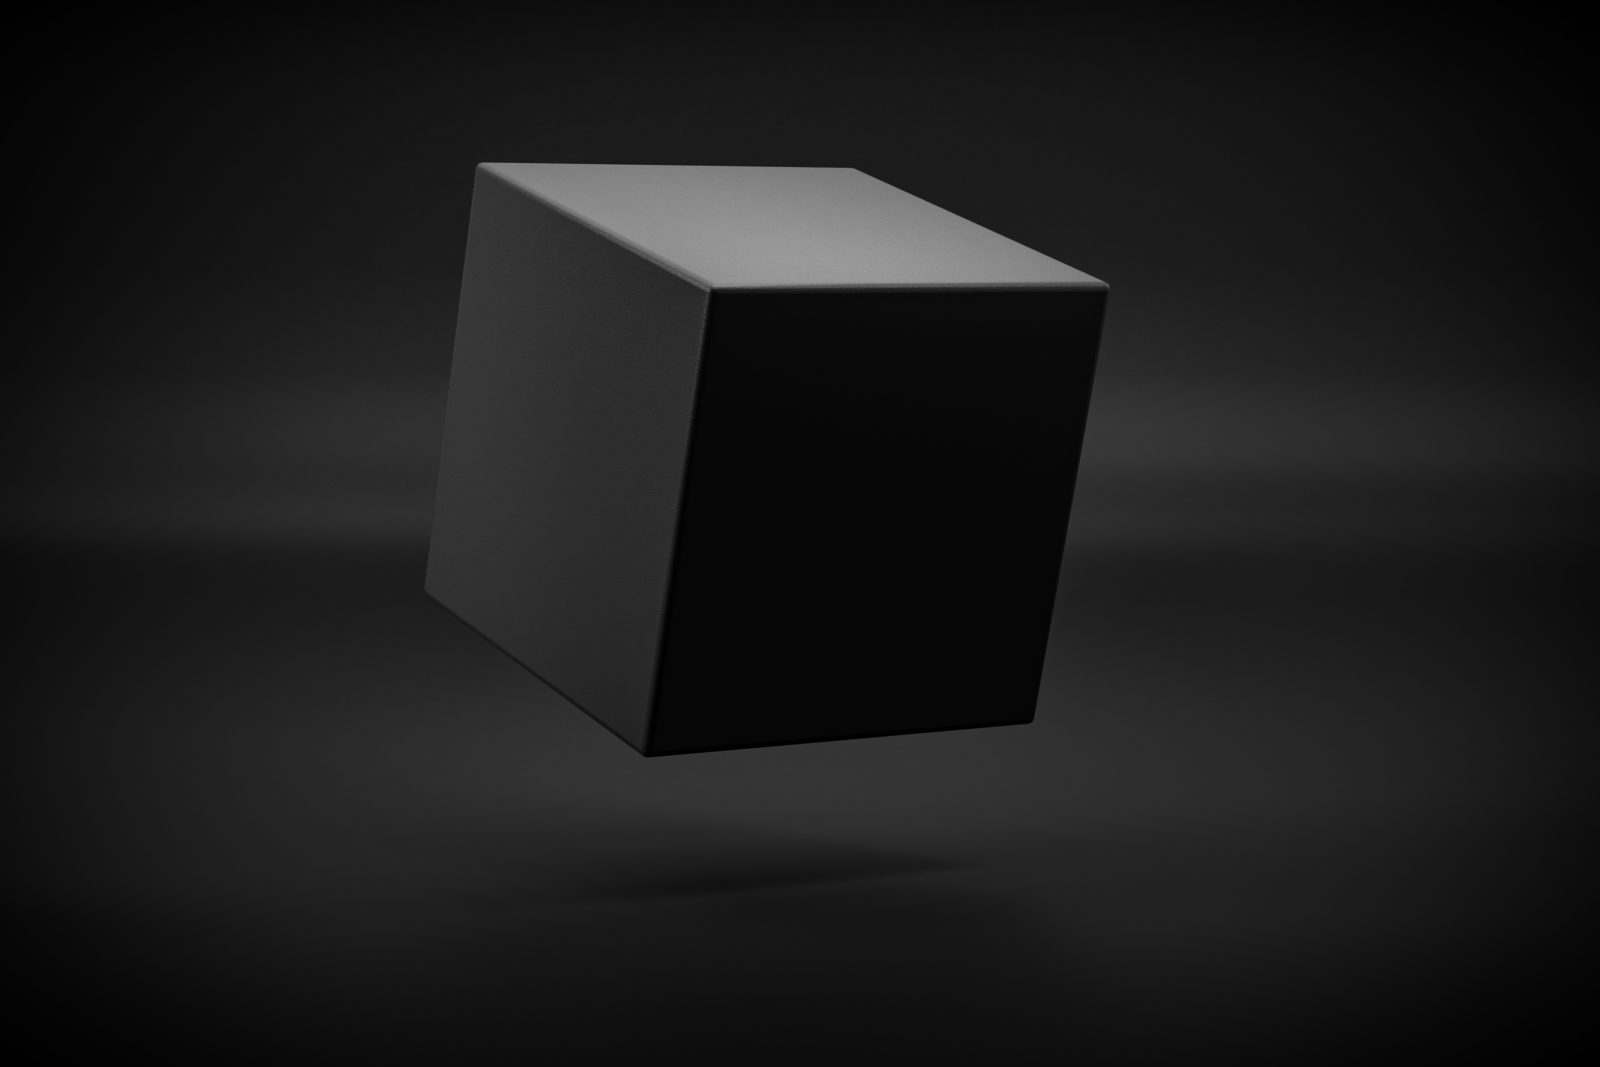 black box levitation on black background 3d rendering